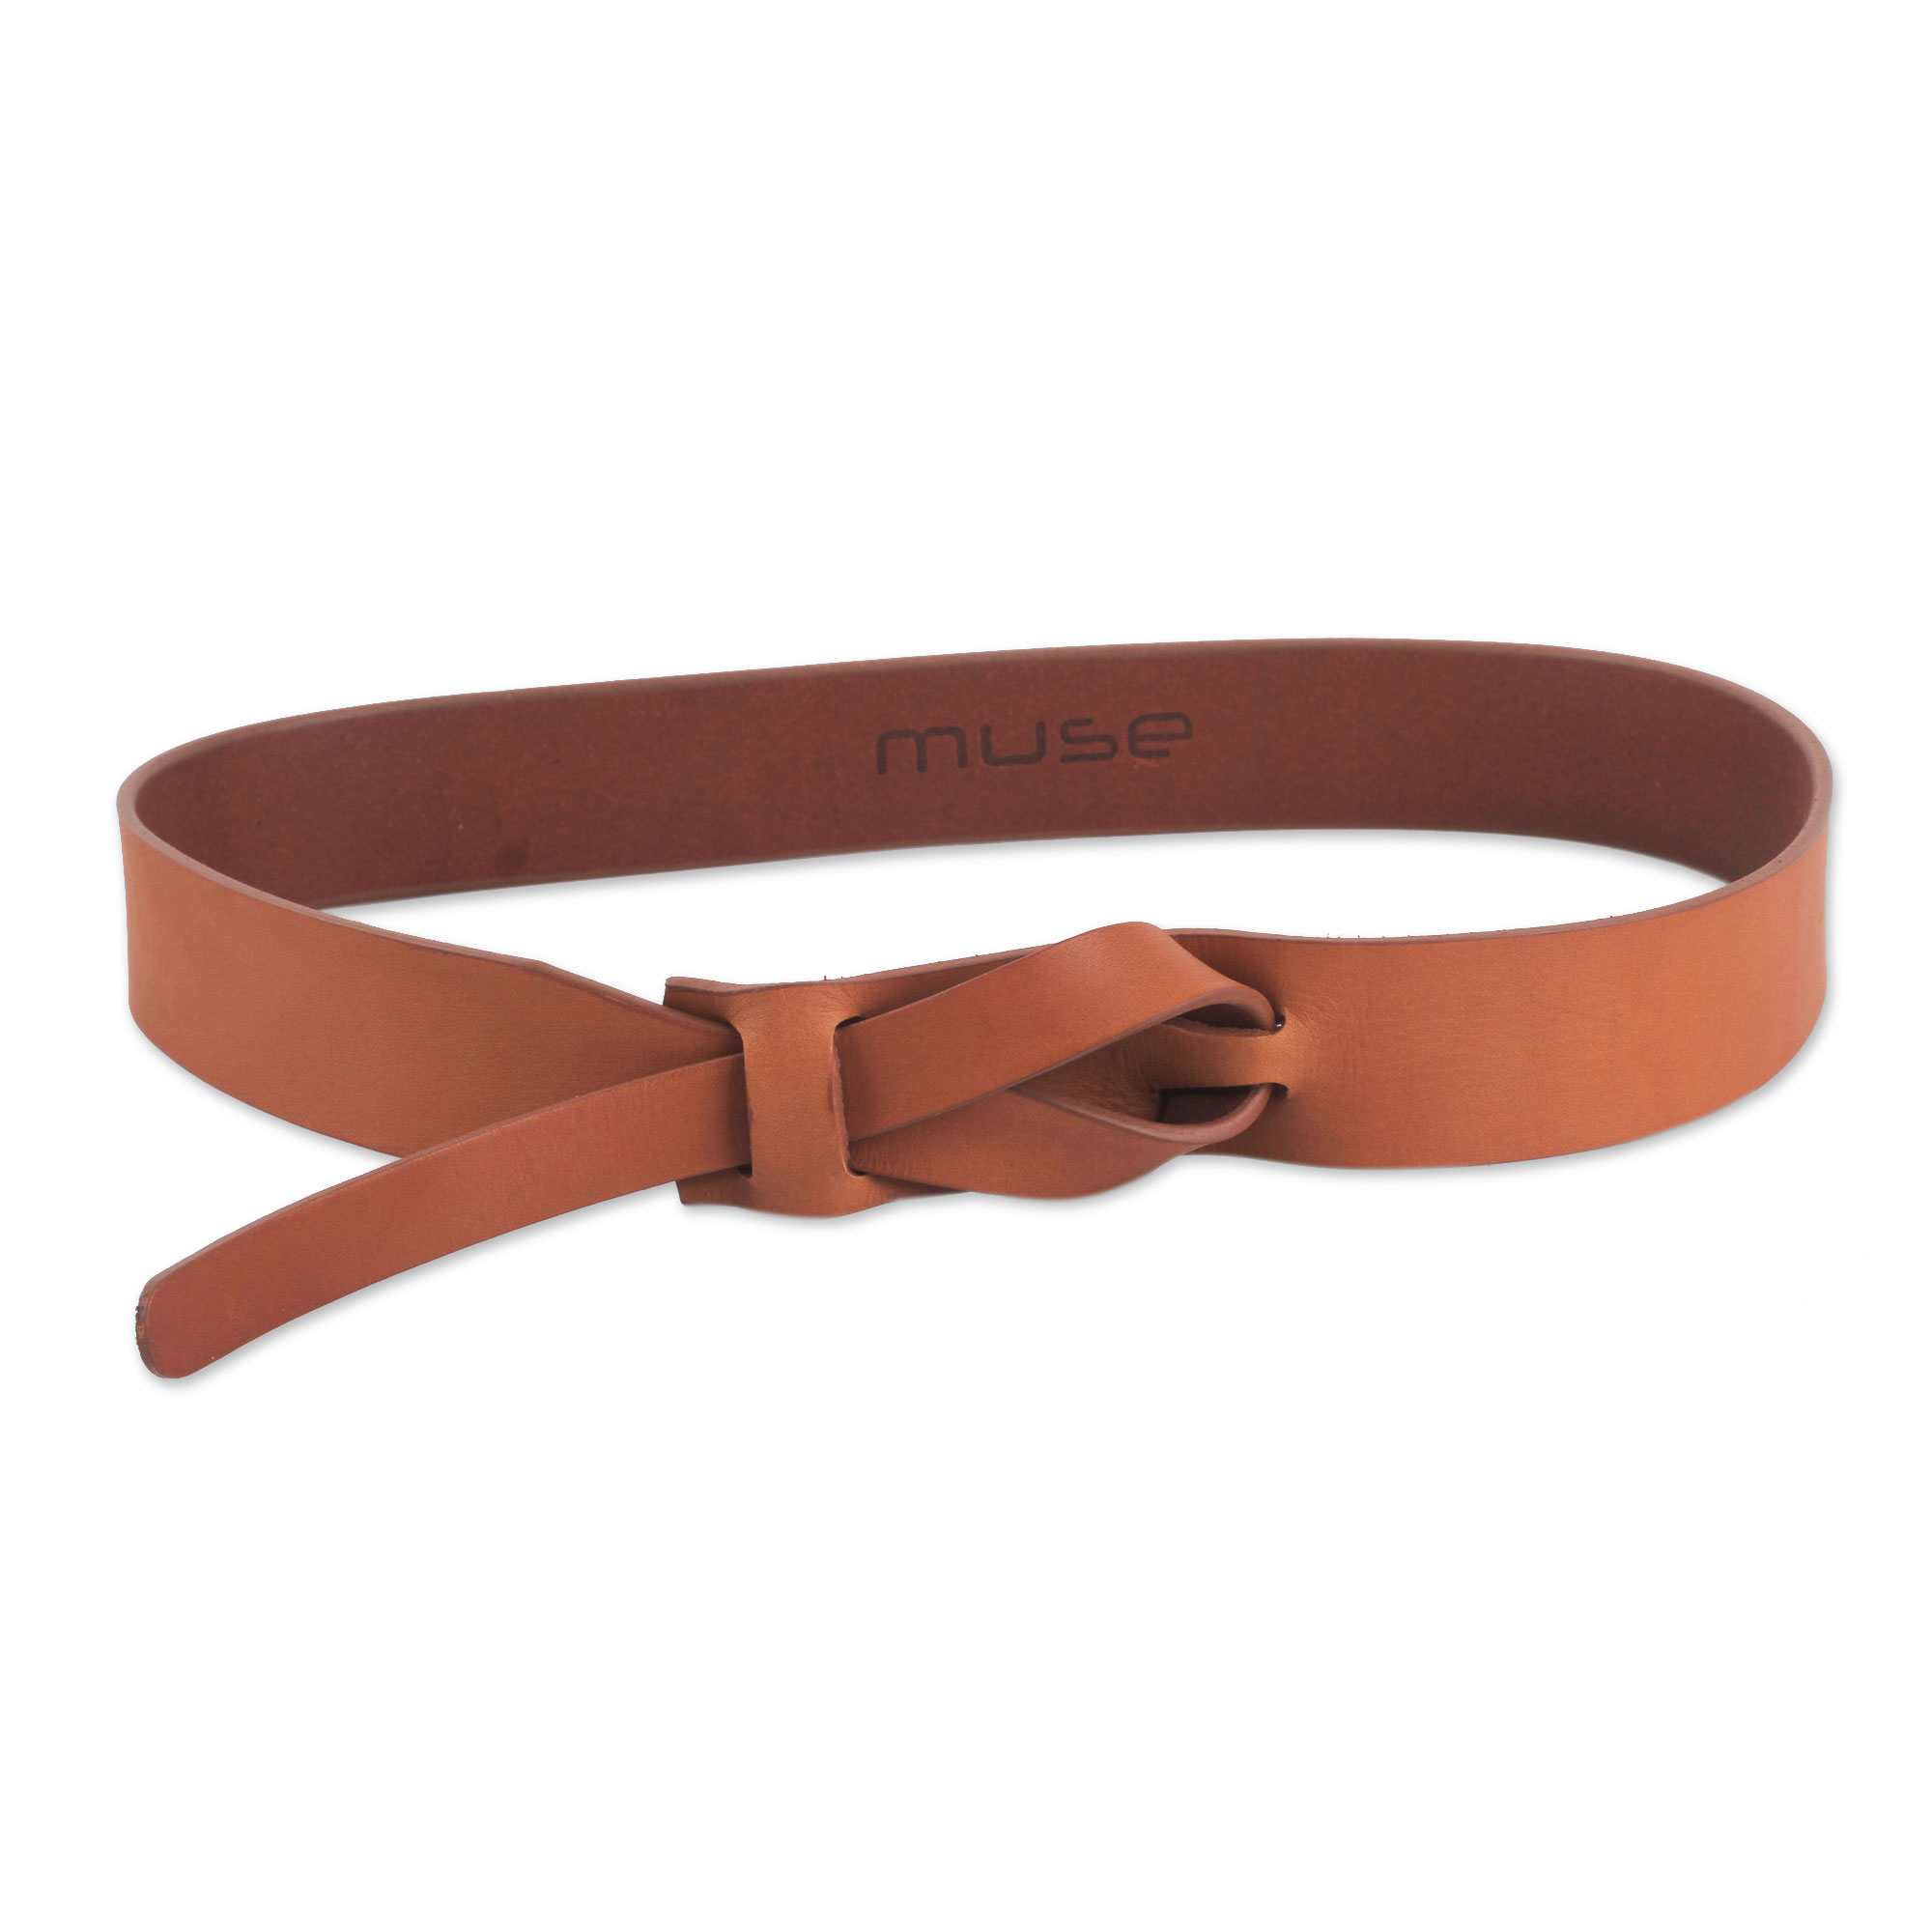 Tan Brown Leather Belt for Women in Modern Design - Classical Tan | NOVICA